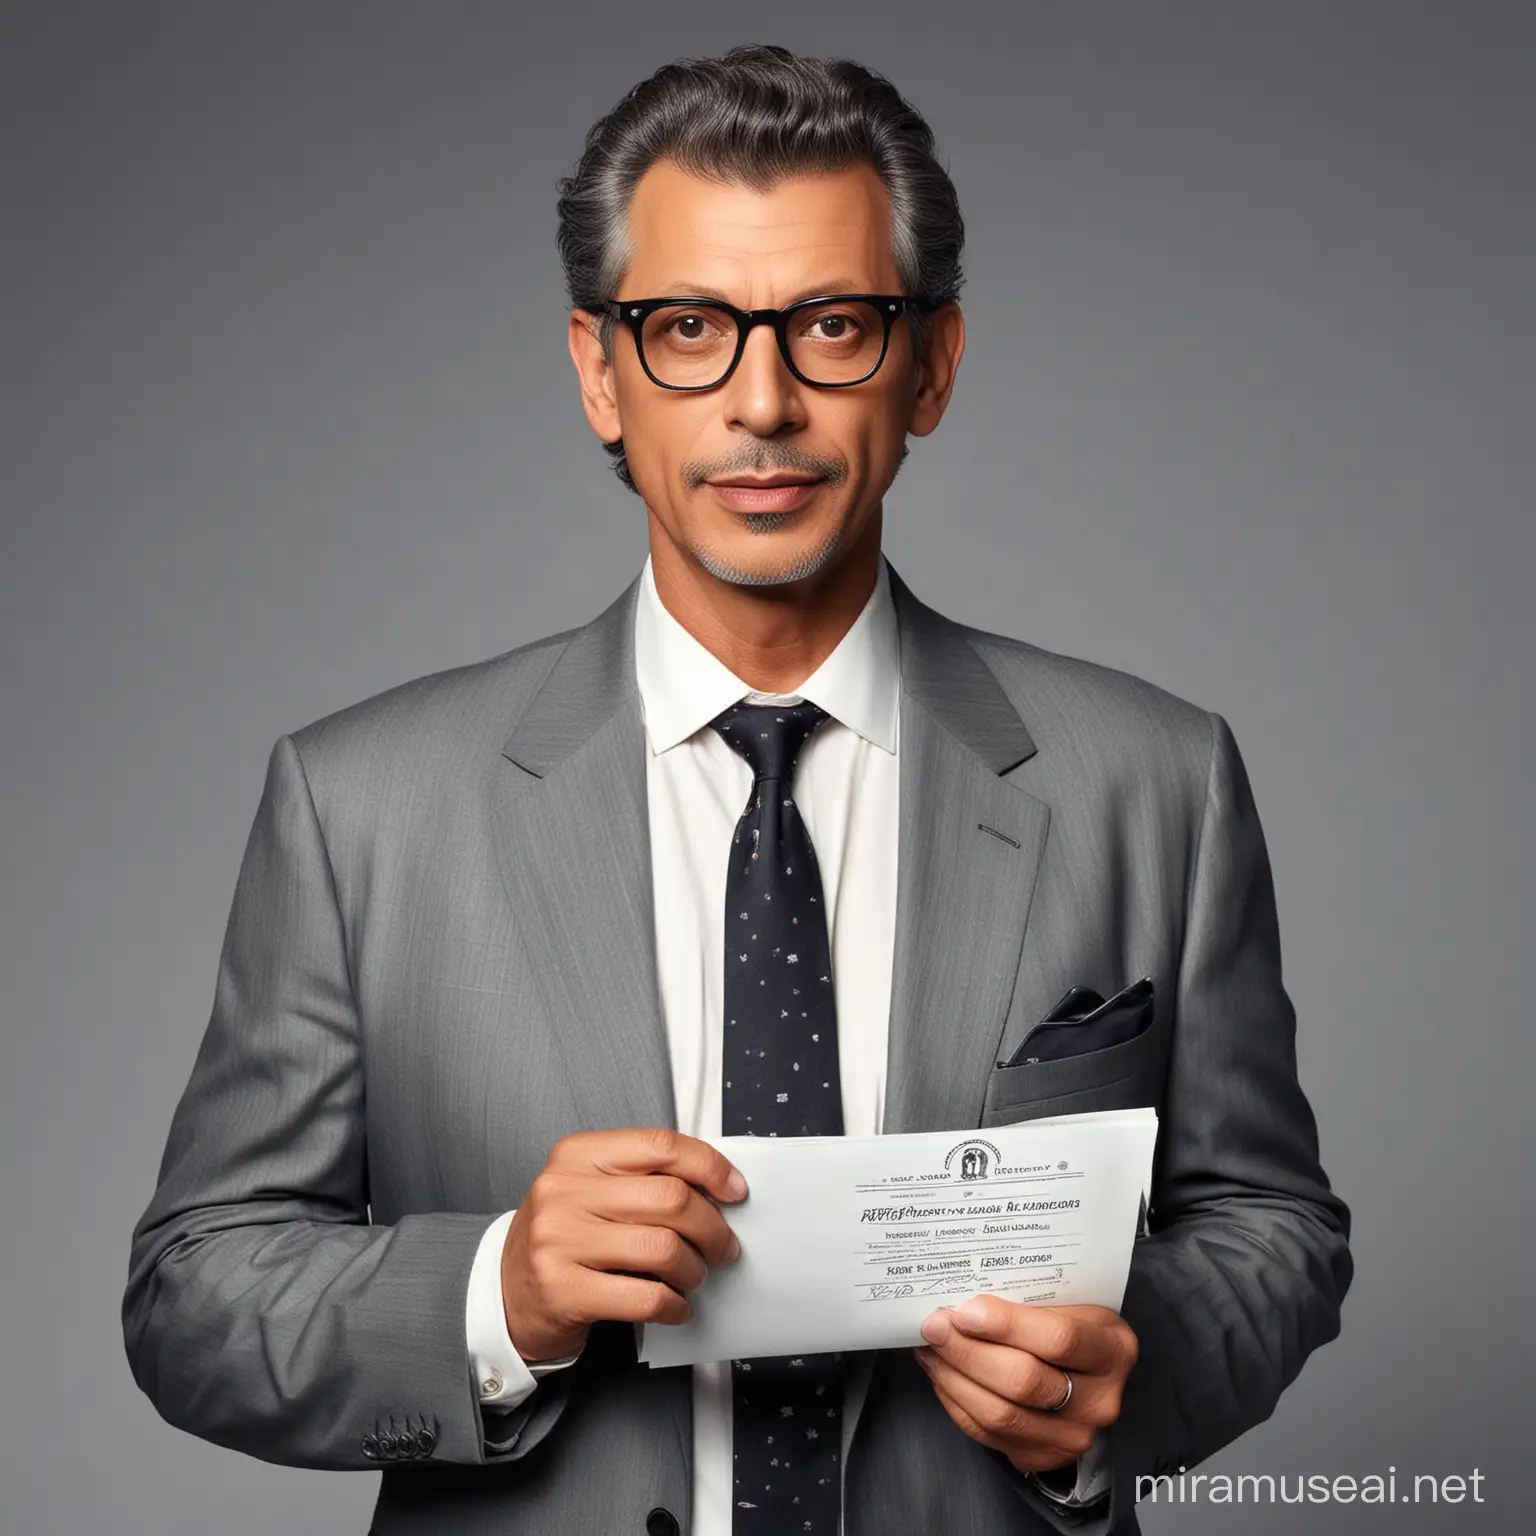 Jeff Goldblum Accounting Career Accumulating Certificates and Credits